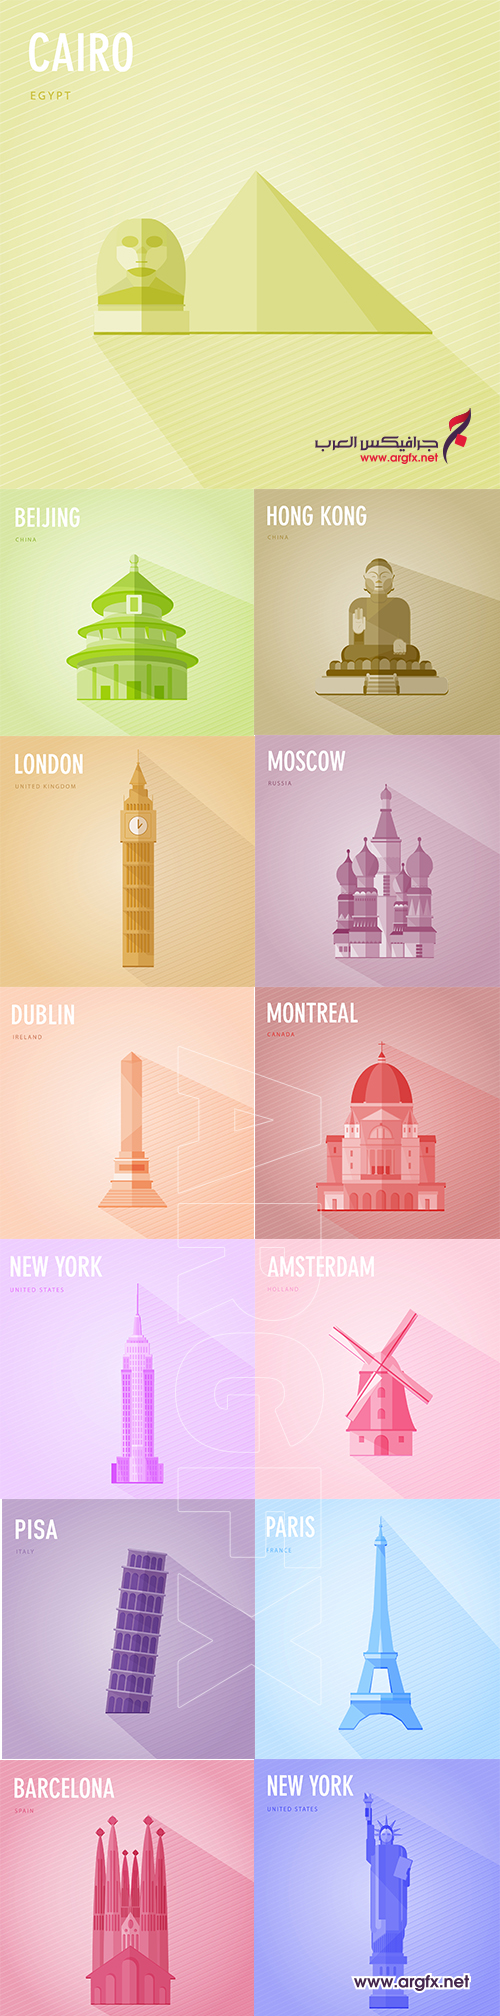  World monuments